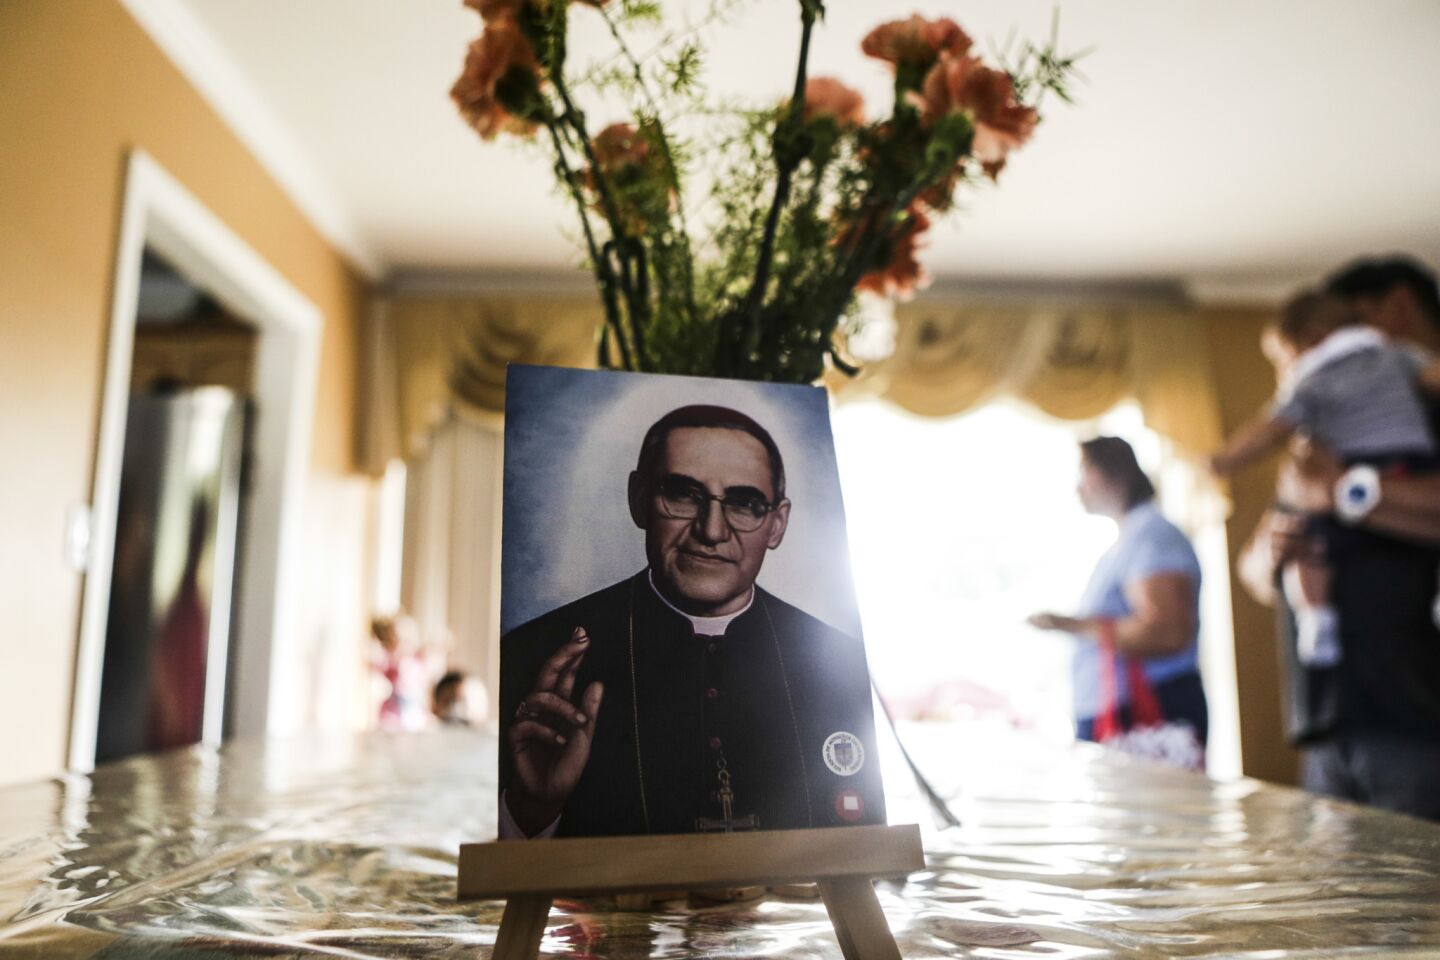 Archbishop Oscar Romero's legacy